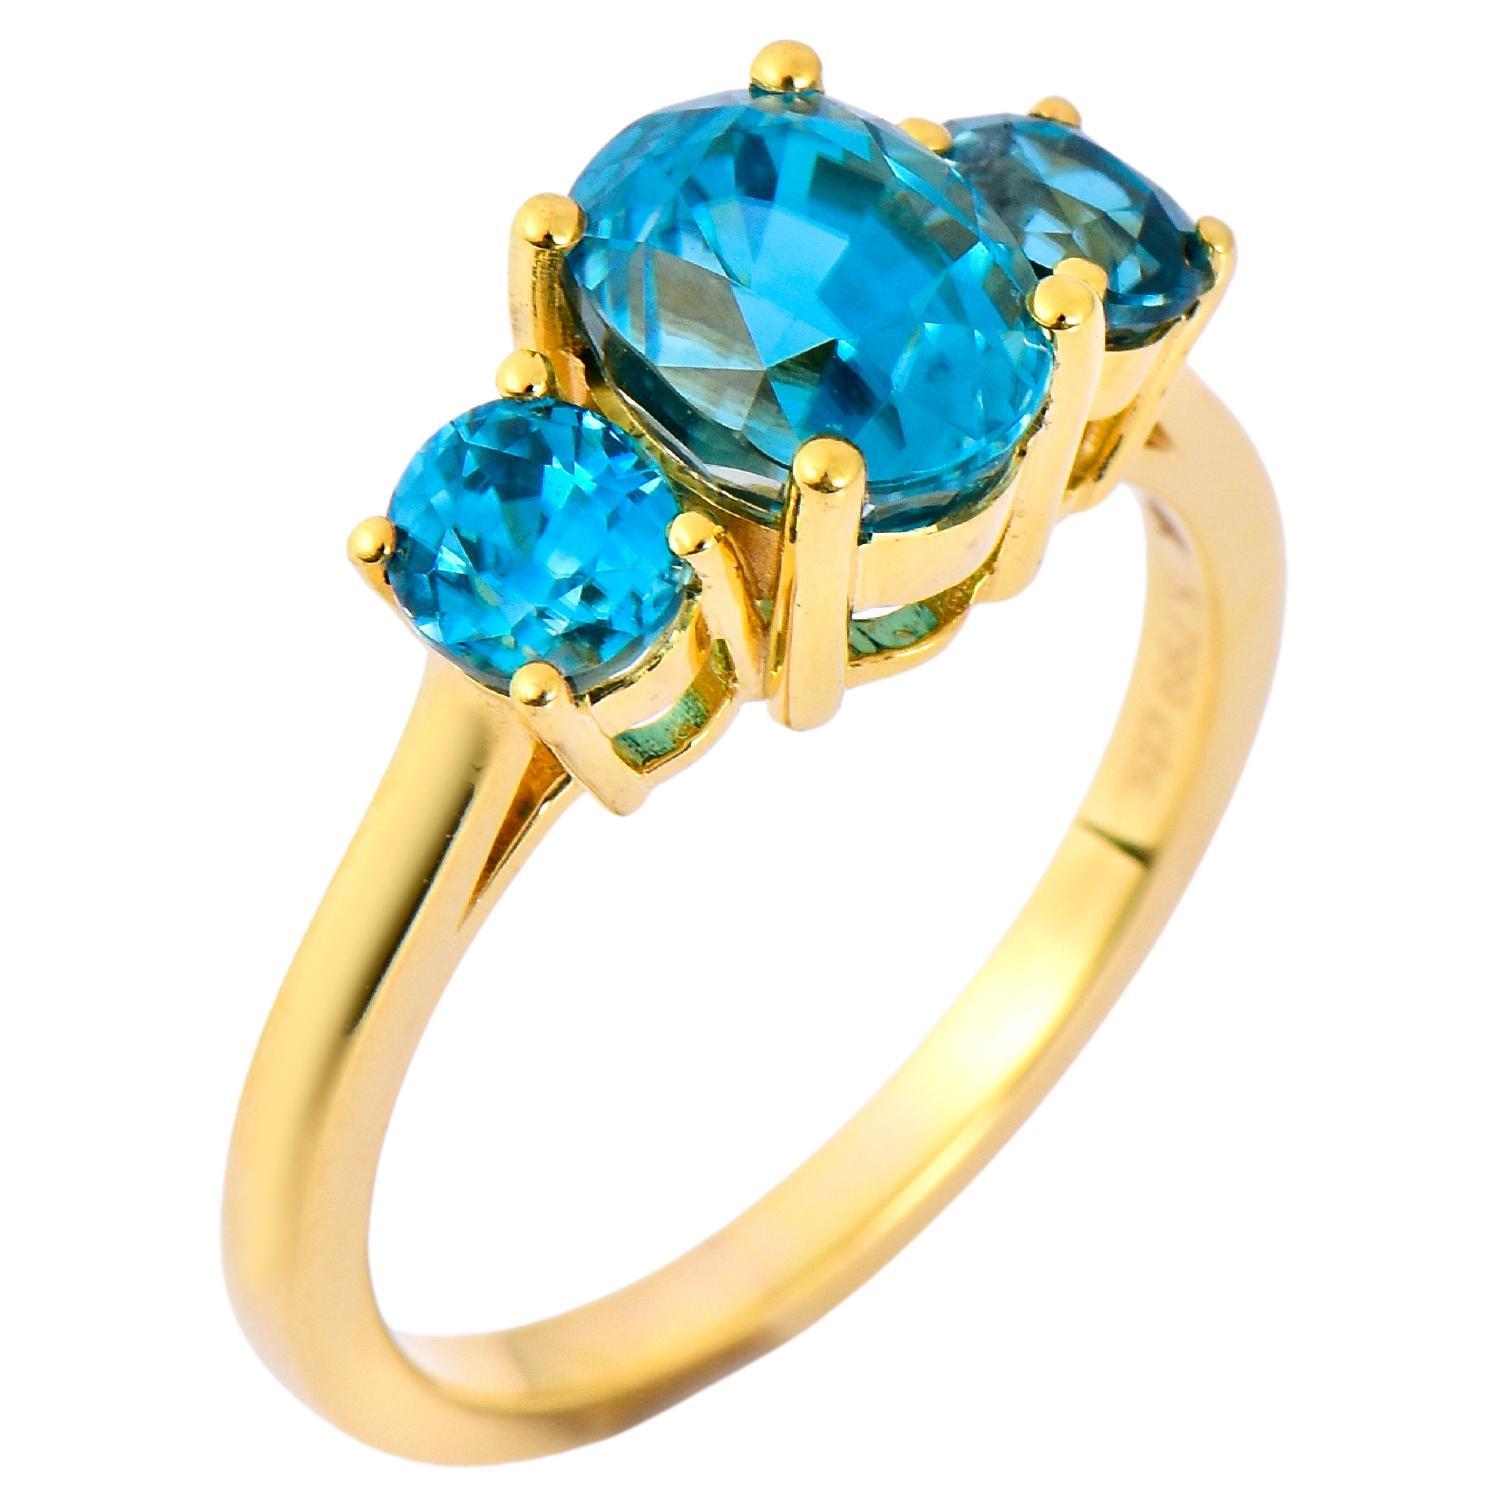 Orloff of Denmark, 5.8 ct Natural Blue Zircon Ring in 10 Karat Gold For Sale